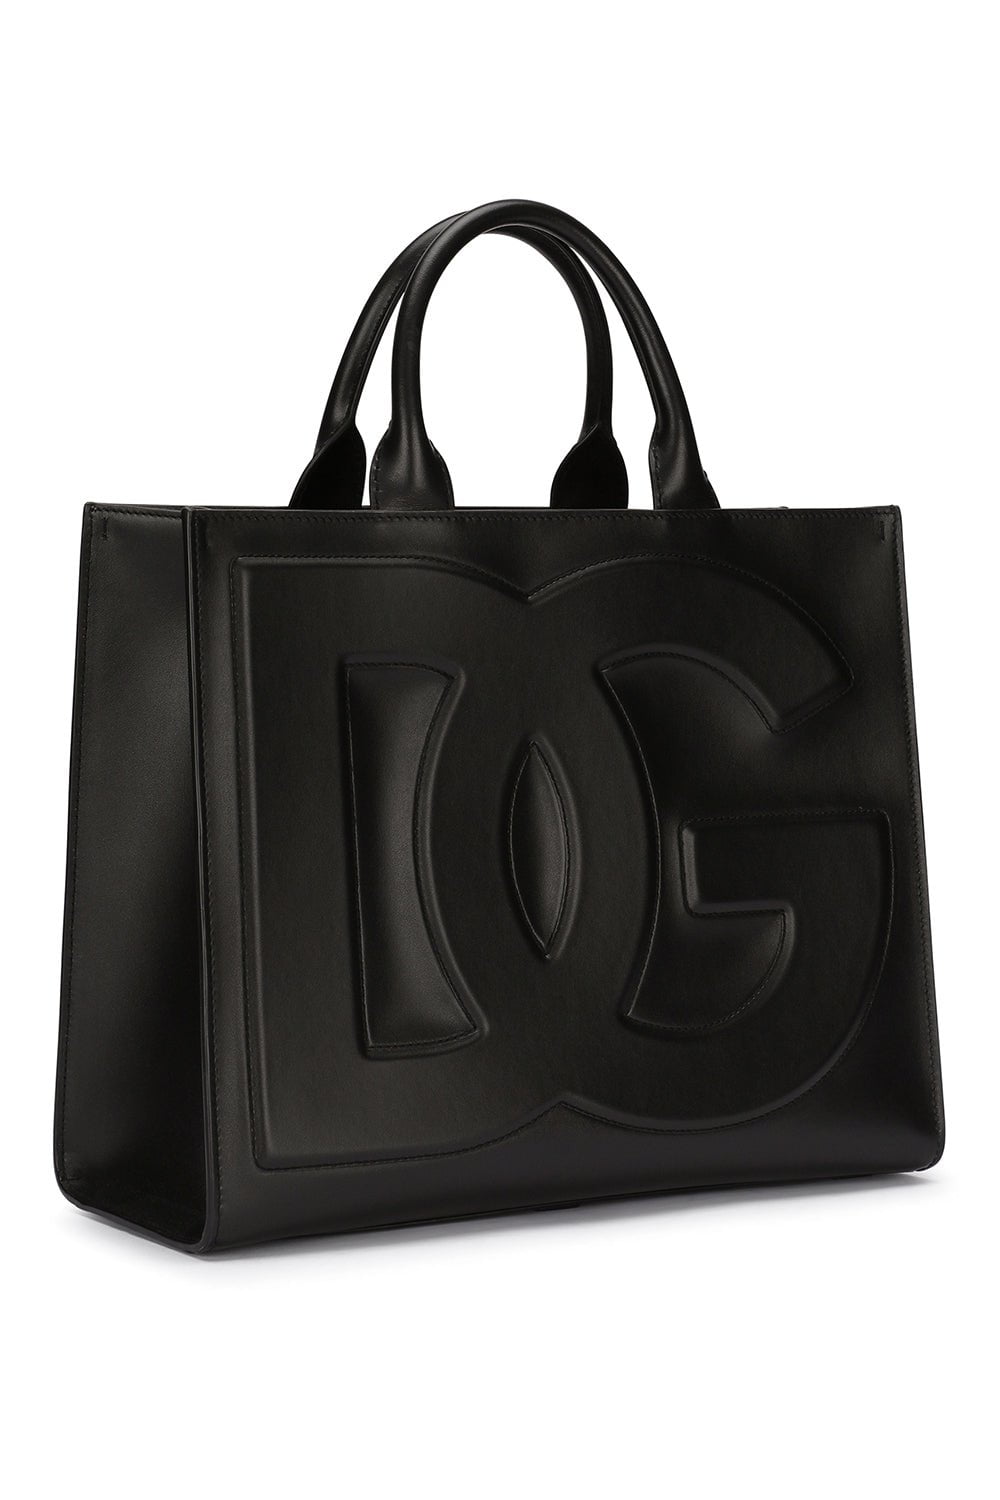 DOLCE & GABBANA-Small DG Logo Daily Shopper-BLACK